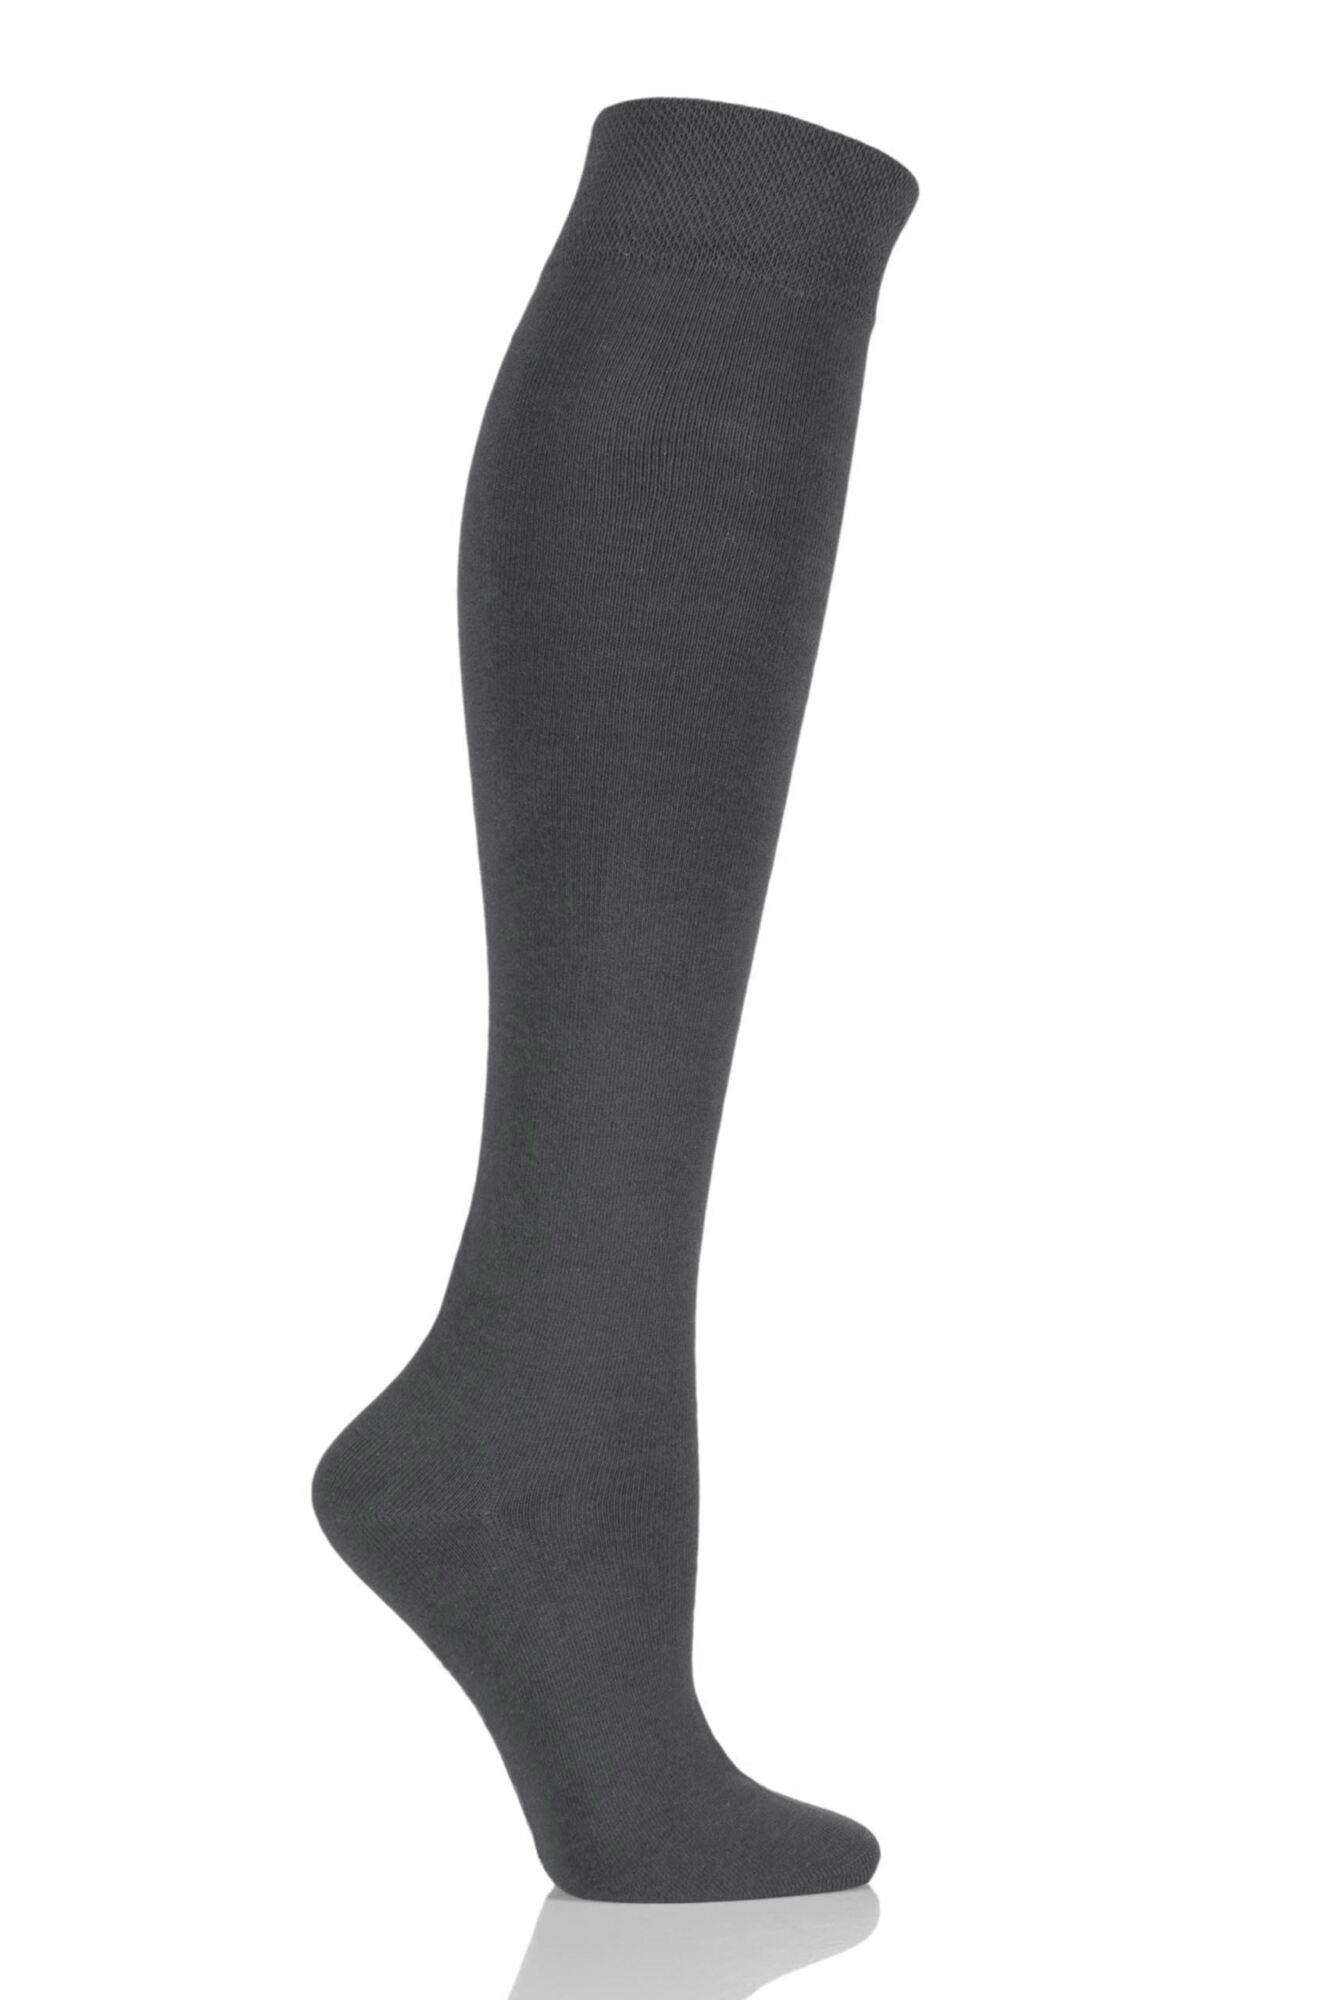 1 Pair Plain Bamboo Knee High Socks with Comfort Cuff and Smooth Toe Seams Kids Unisex - SOCKSHOP